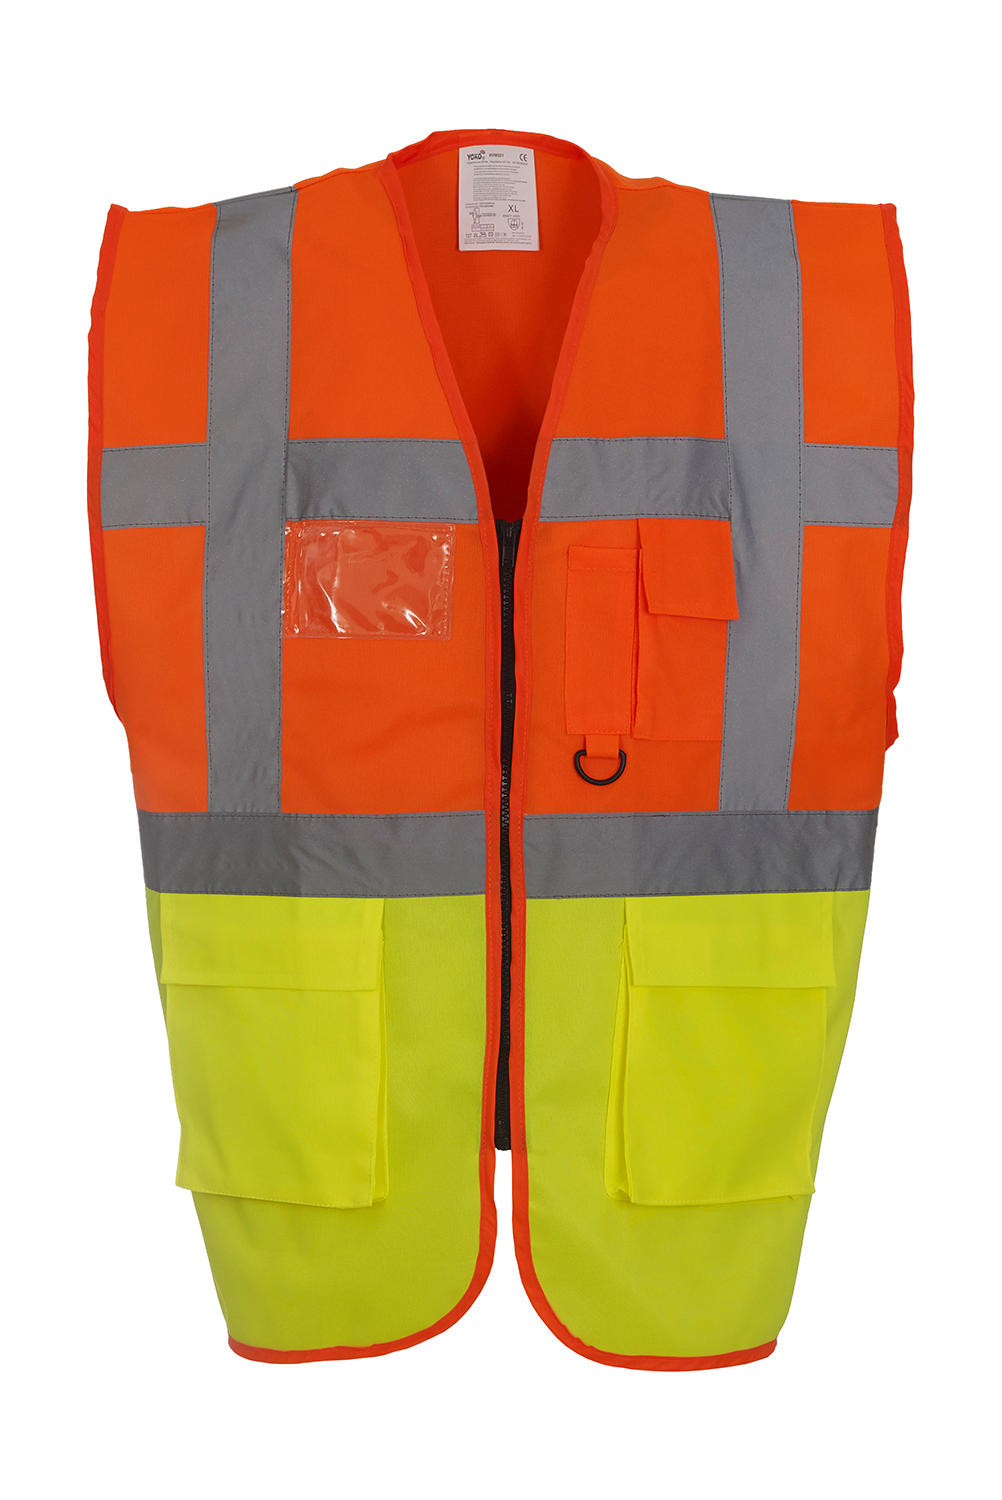 Výstražná vesta Exec - oranžová-žlutá, XL